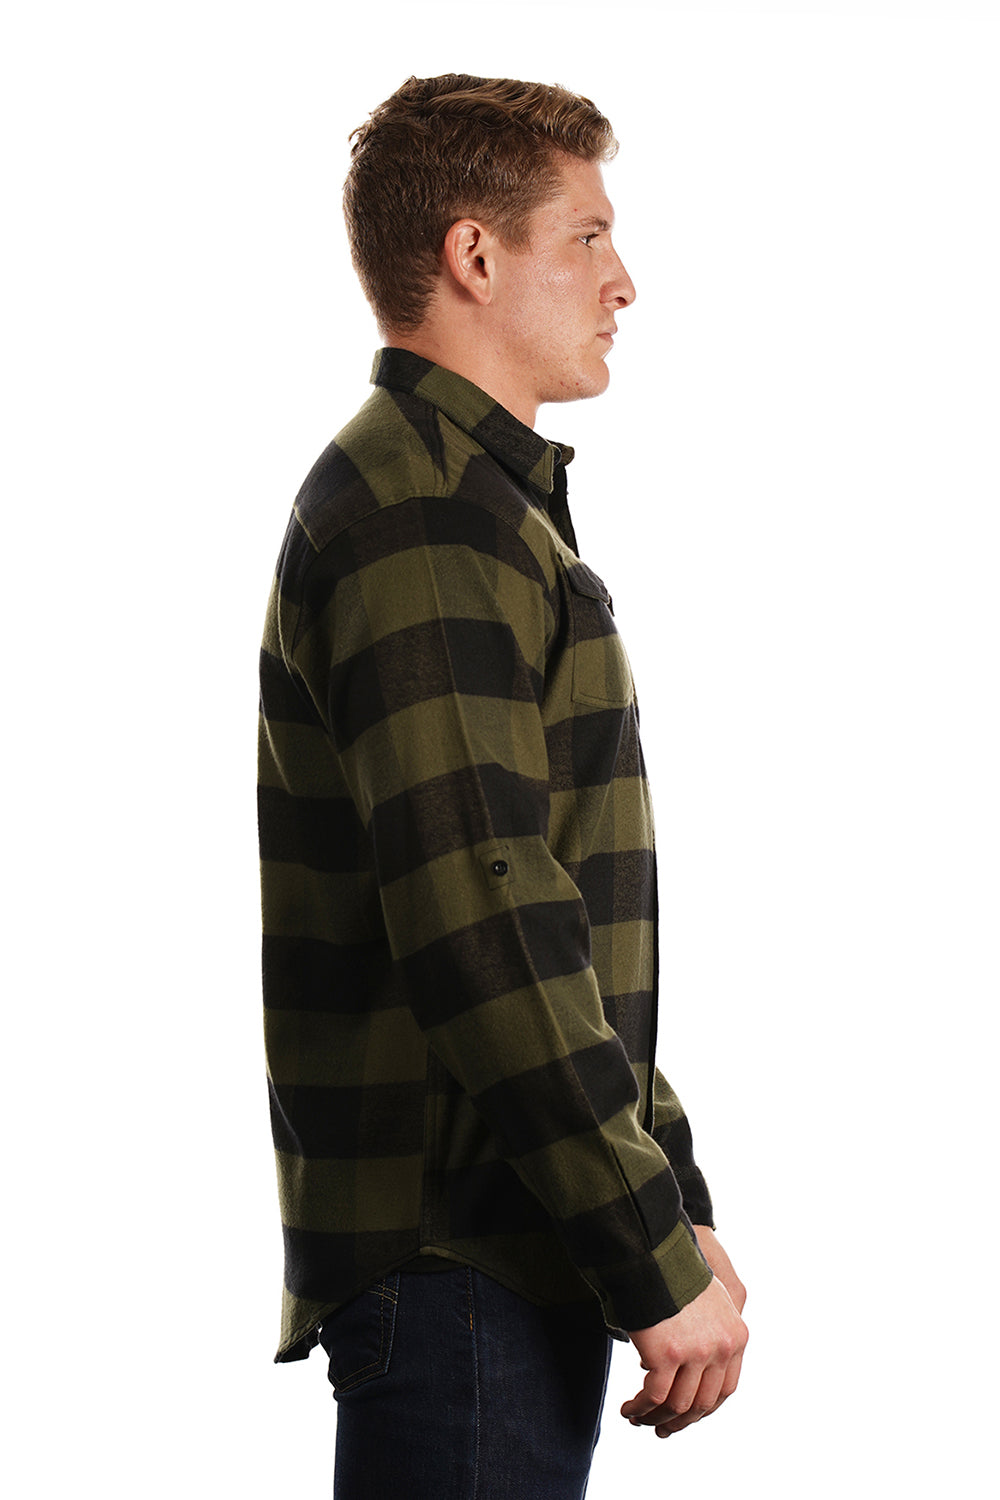 Burnside B8210/8210 Mens Flannel Long Sleeve Button Down Shirt w/ Double Pockets Army Green/Black Model Side